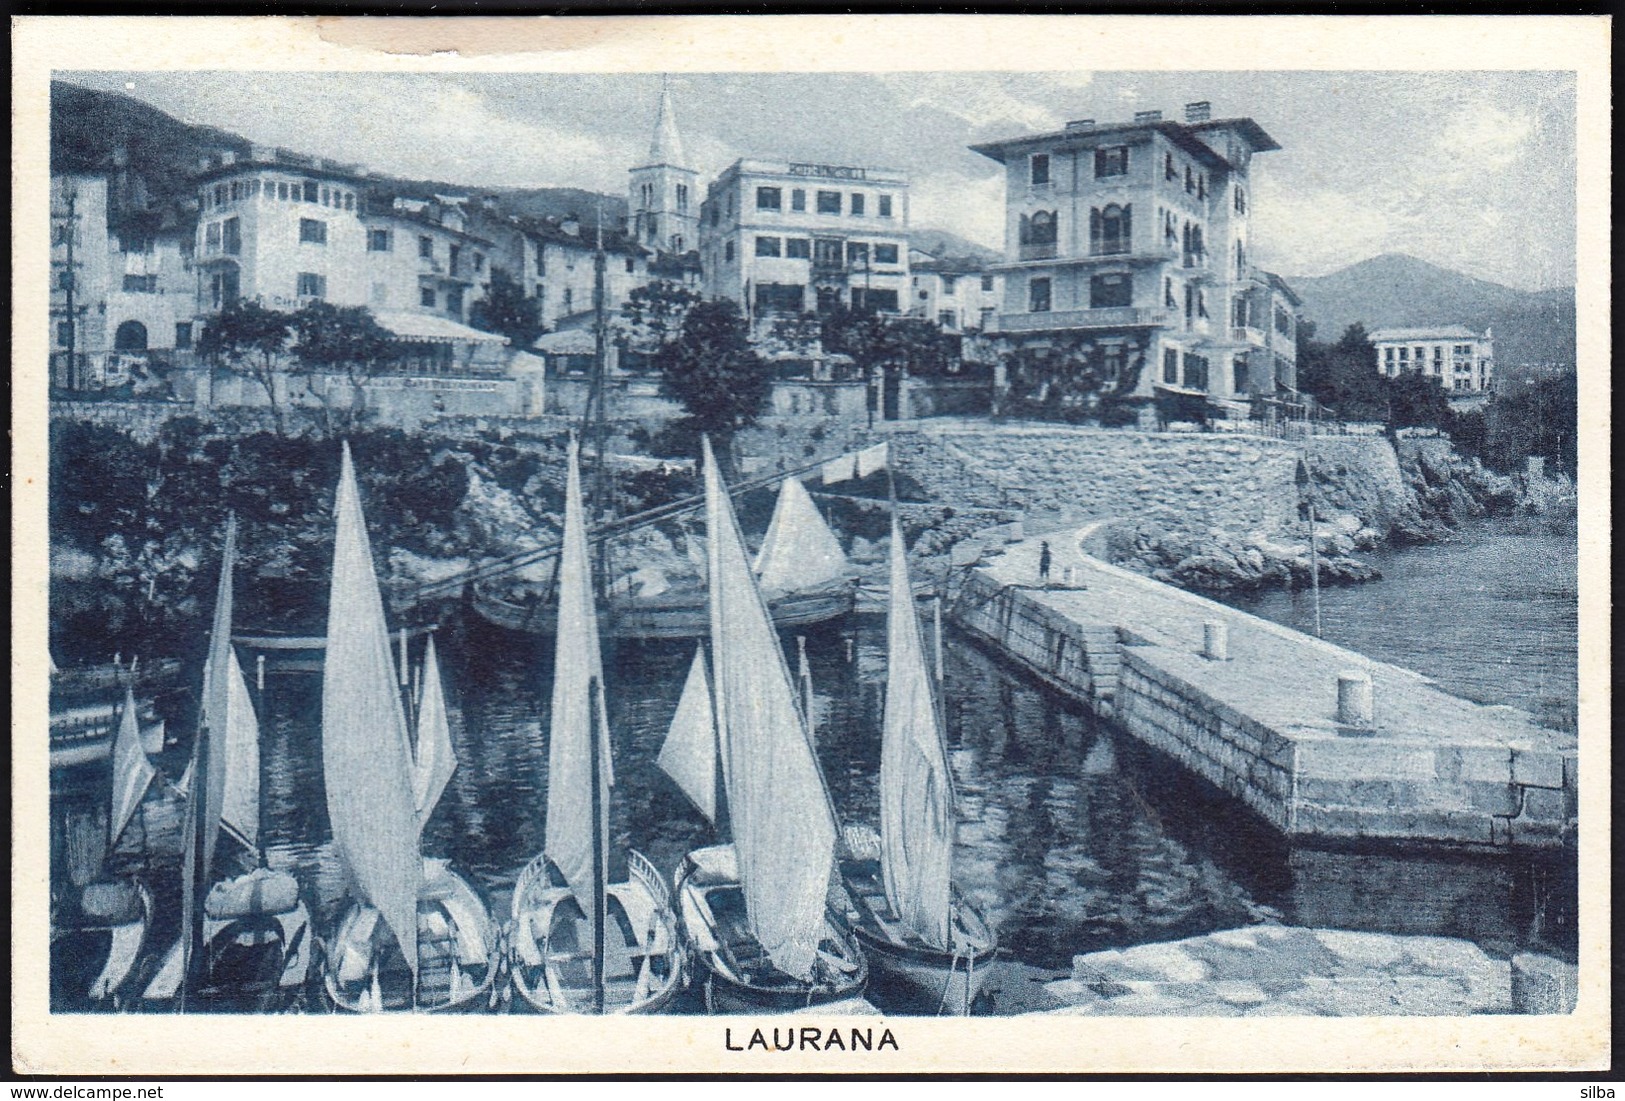 Croatia Lovran 1925 / Laurana, Lovrana / Molo, Port, Sailing Boats / A.Dietrick / Unused, Uncirculated - Croatia